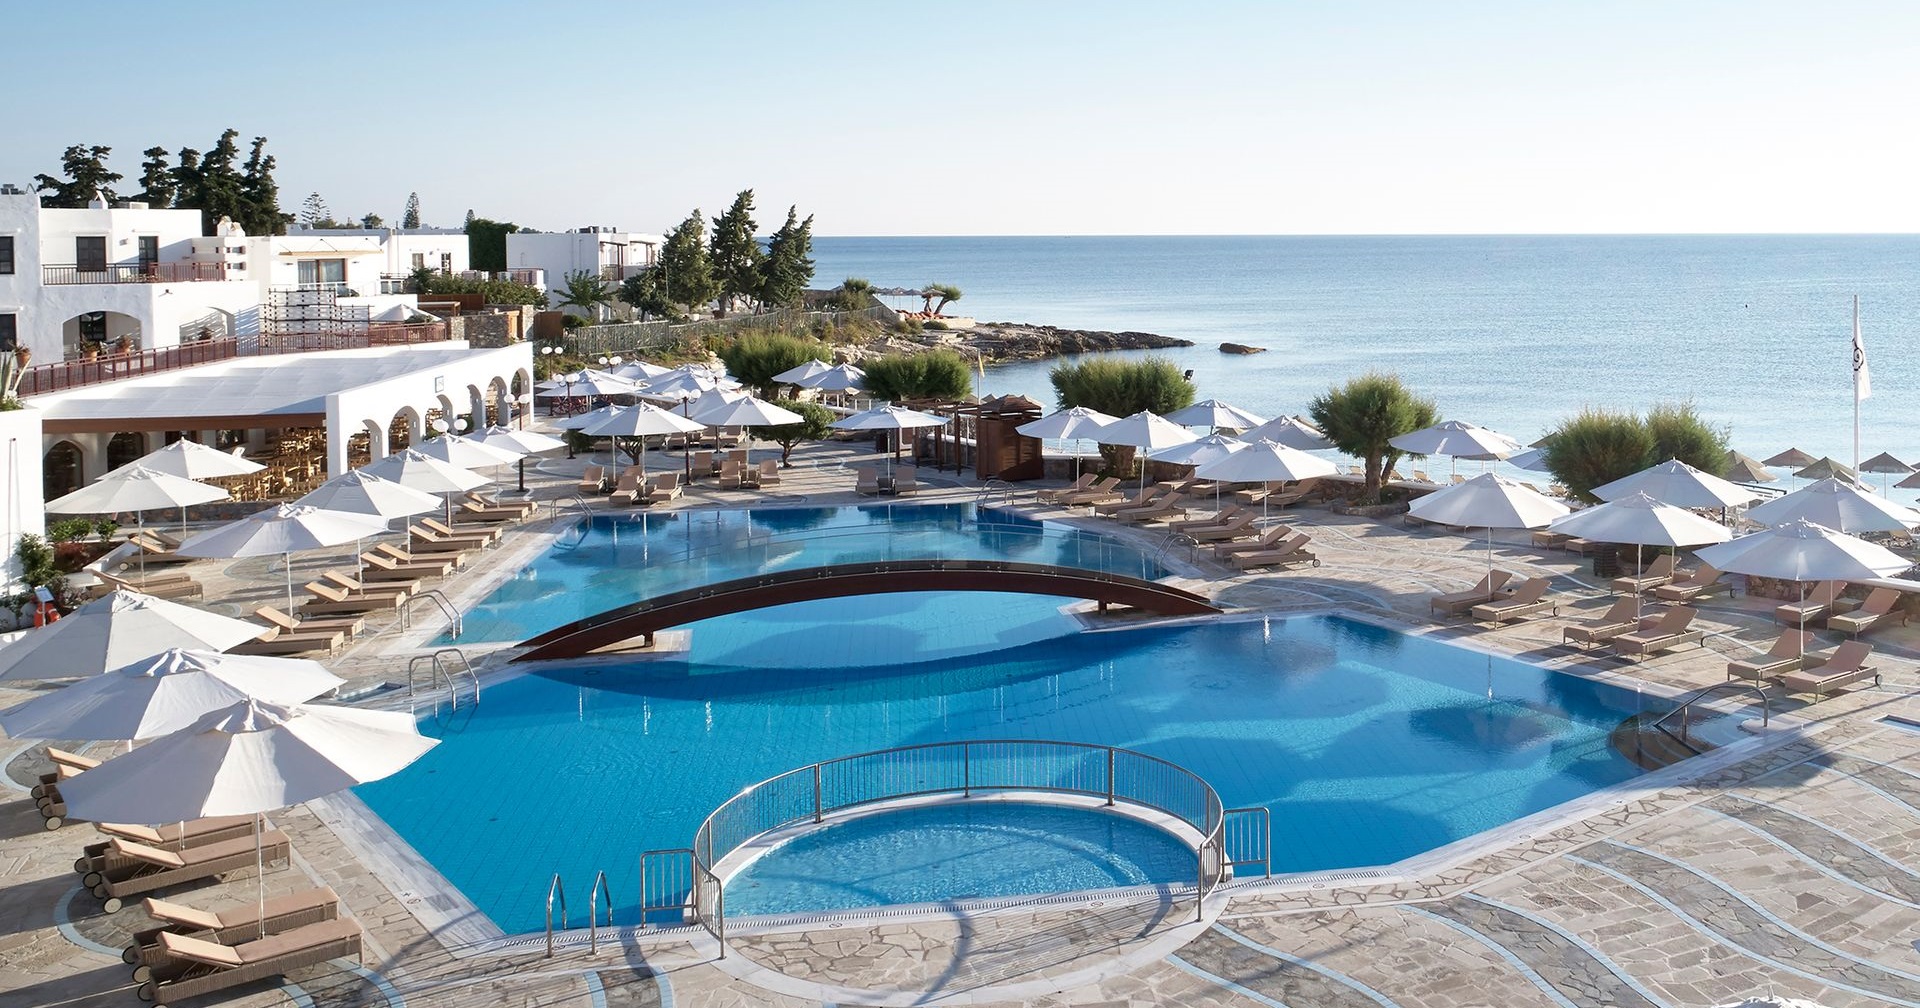 5* Creta Maris Beach Resort - Χερσόνησος, Ηράκλειο ✦ 2 Ημέρες (1 Διανυκτέρευση) ✦ 2 άτομα + 1 παιδί έως 11 ετών ✦ All Inclusive ✦ 02/04/2022 έως 30/09/2022 ✦ Μπροστά στην παραλία!